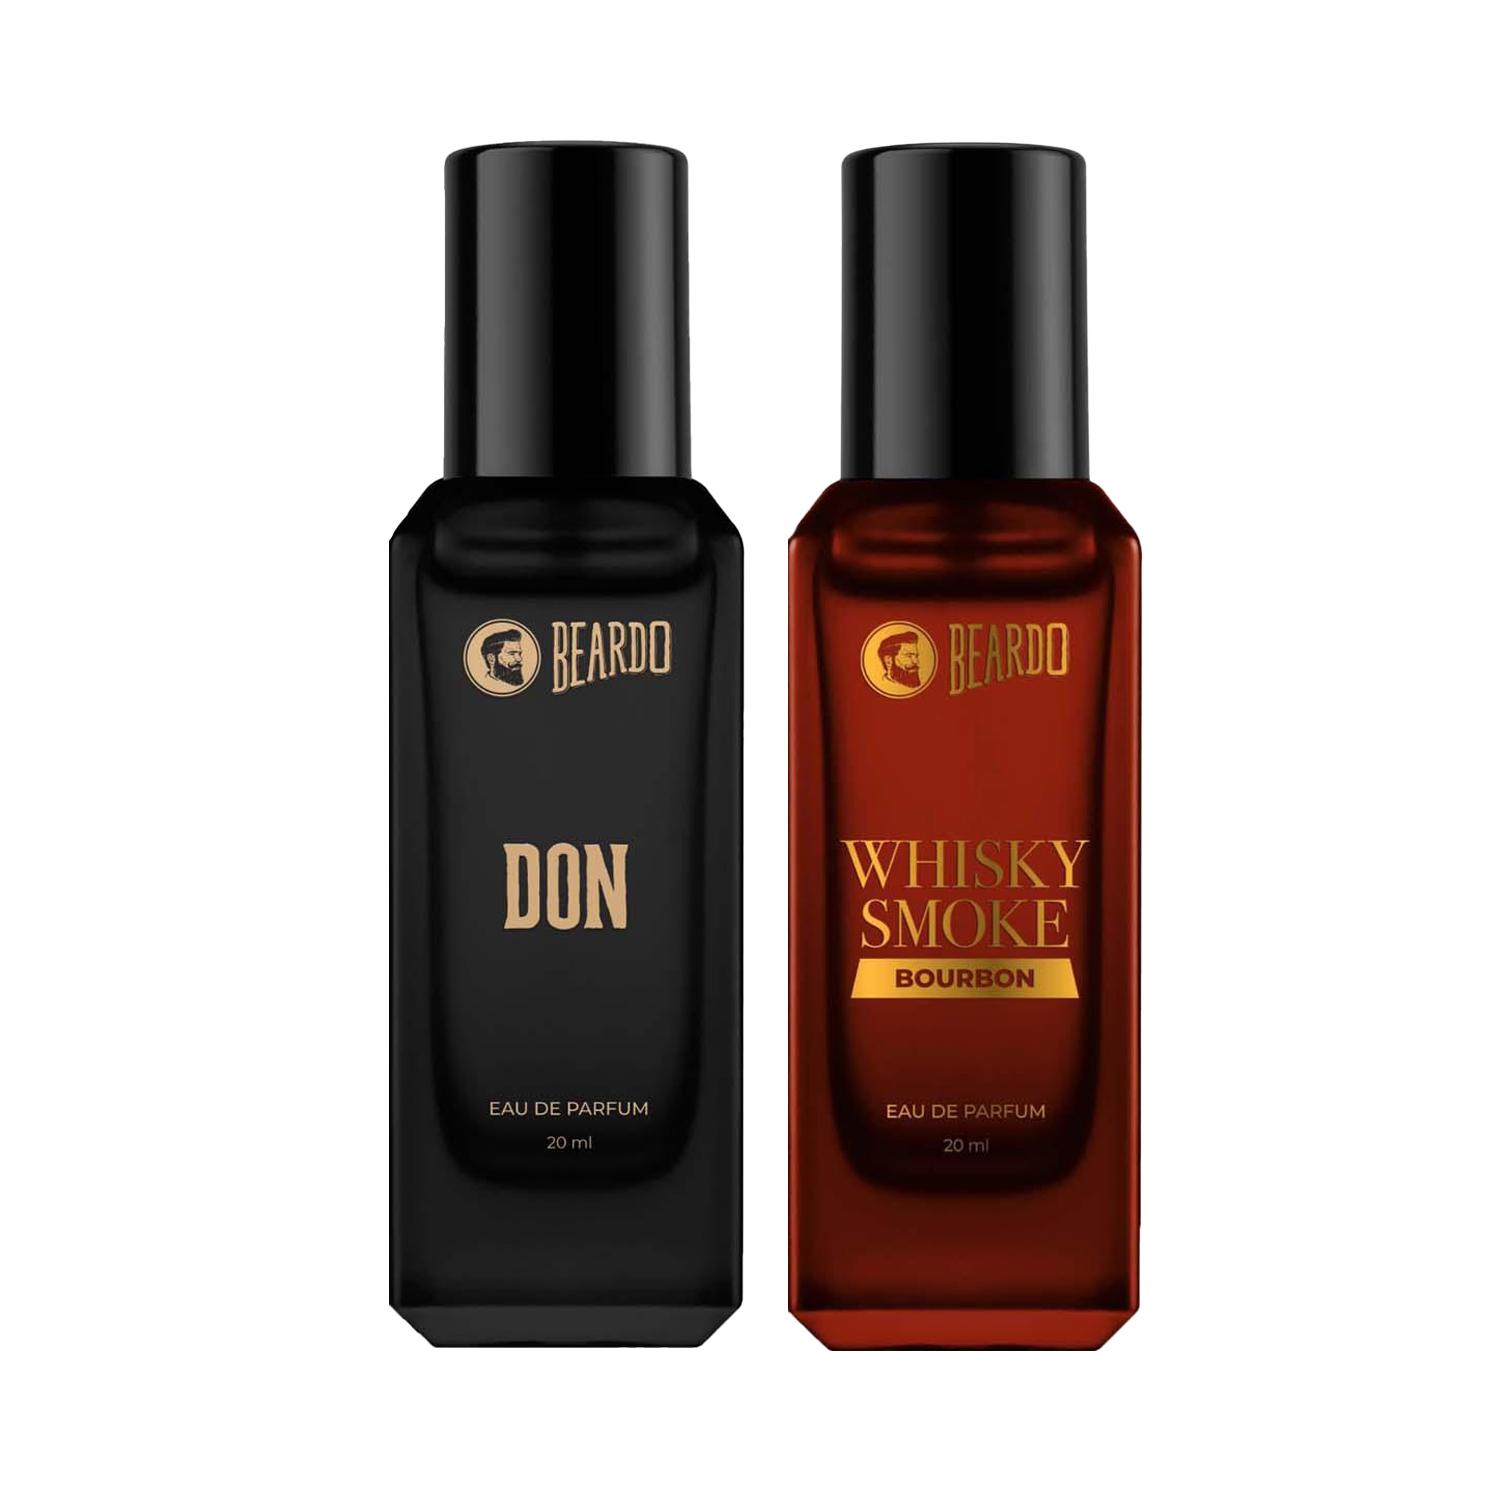 Beardo | Beardo Don Perfume for Men (20 ml) & Bourbon Whisky Smoke Perfume Gift (20 ml) Combo